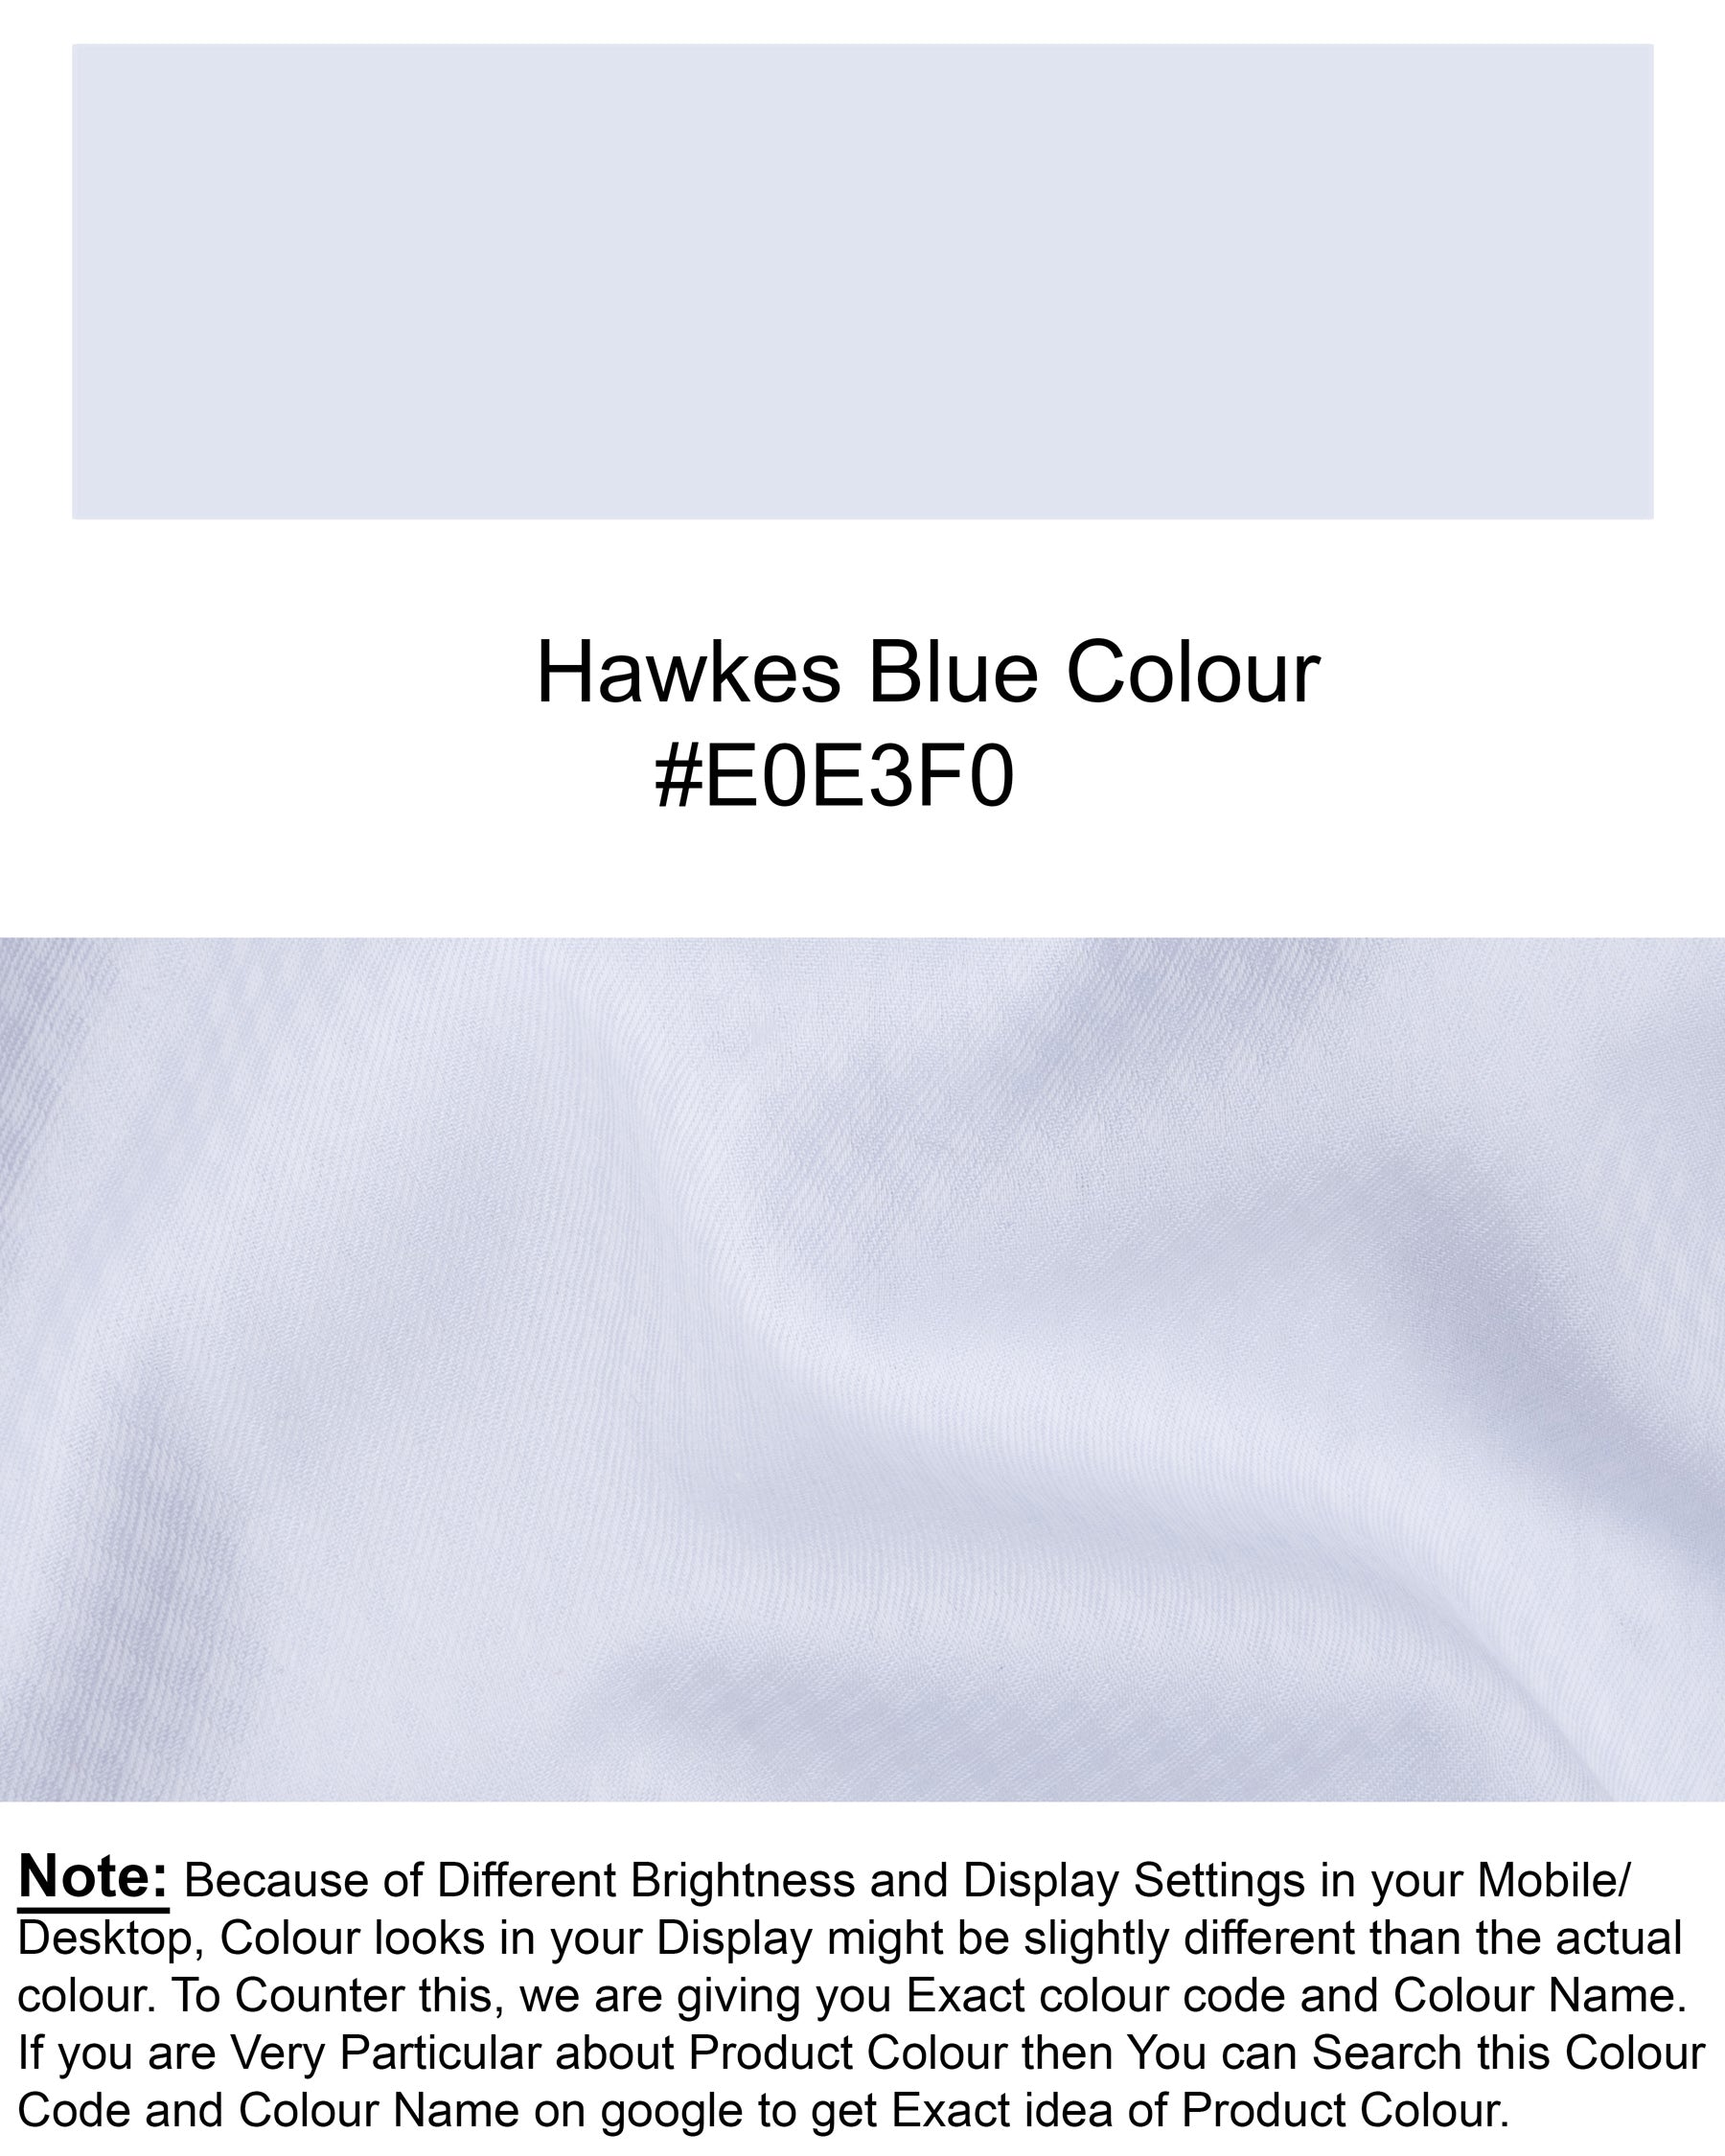 Hawkes Blue Dobby Textured Premium Giza Cotton Shirt 5500-CLOTH-P-38, 5500-CLOTH-P-H-38, 5500-CLOTH-P-39, 5500-CLOTH-P-H-39, 5500-CLOTH-P-40, 5500-CLOTH-P-H-40, 5500-CLOTH-P-42, 5500-CLOTH-P-H-42, 5500-CLOTH-P-44, 5500-CLOTH-P-H-44, 5500-CLOTH-P-46, 5500-CLOTH-P-H-46, 5500-CLOTH-P-48, 5500-CLOTH-P-H-48, 5500-CLOTH-P-50, 5500-CLOTH-P-H-50, 5500-CLOTH-P-52, 5500-CLOTH-P-H-52